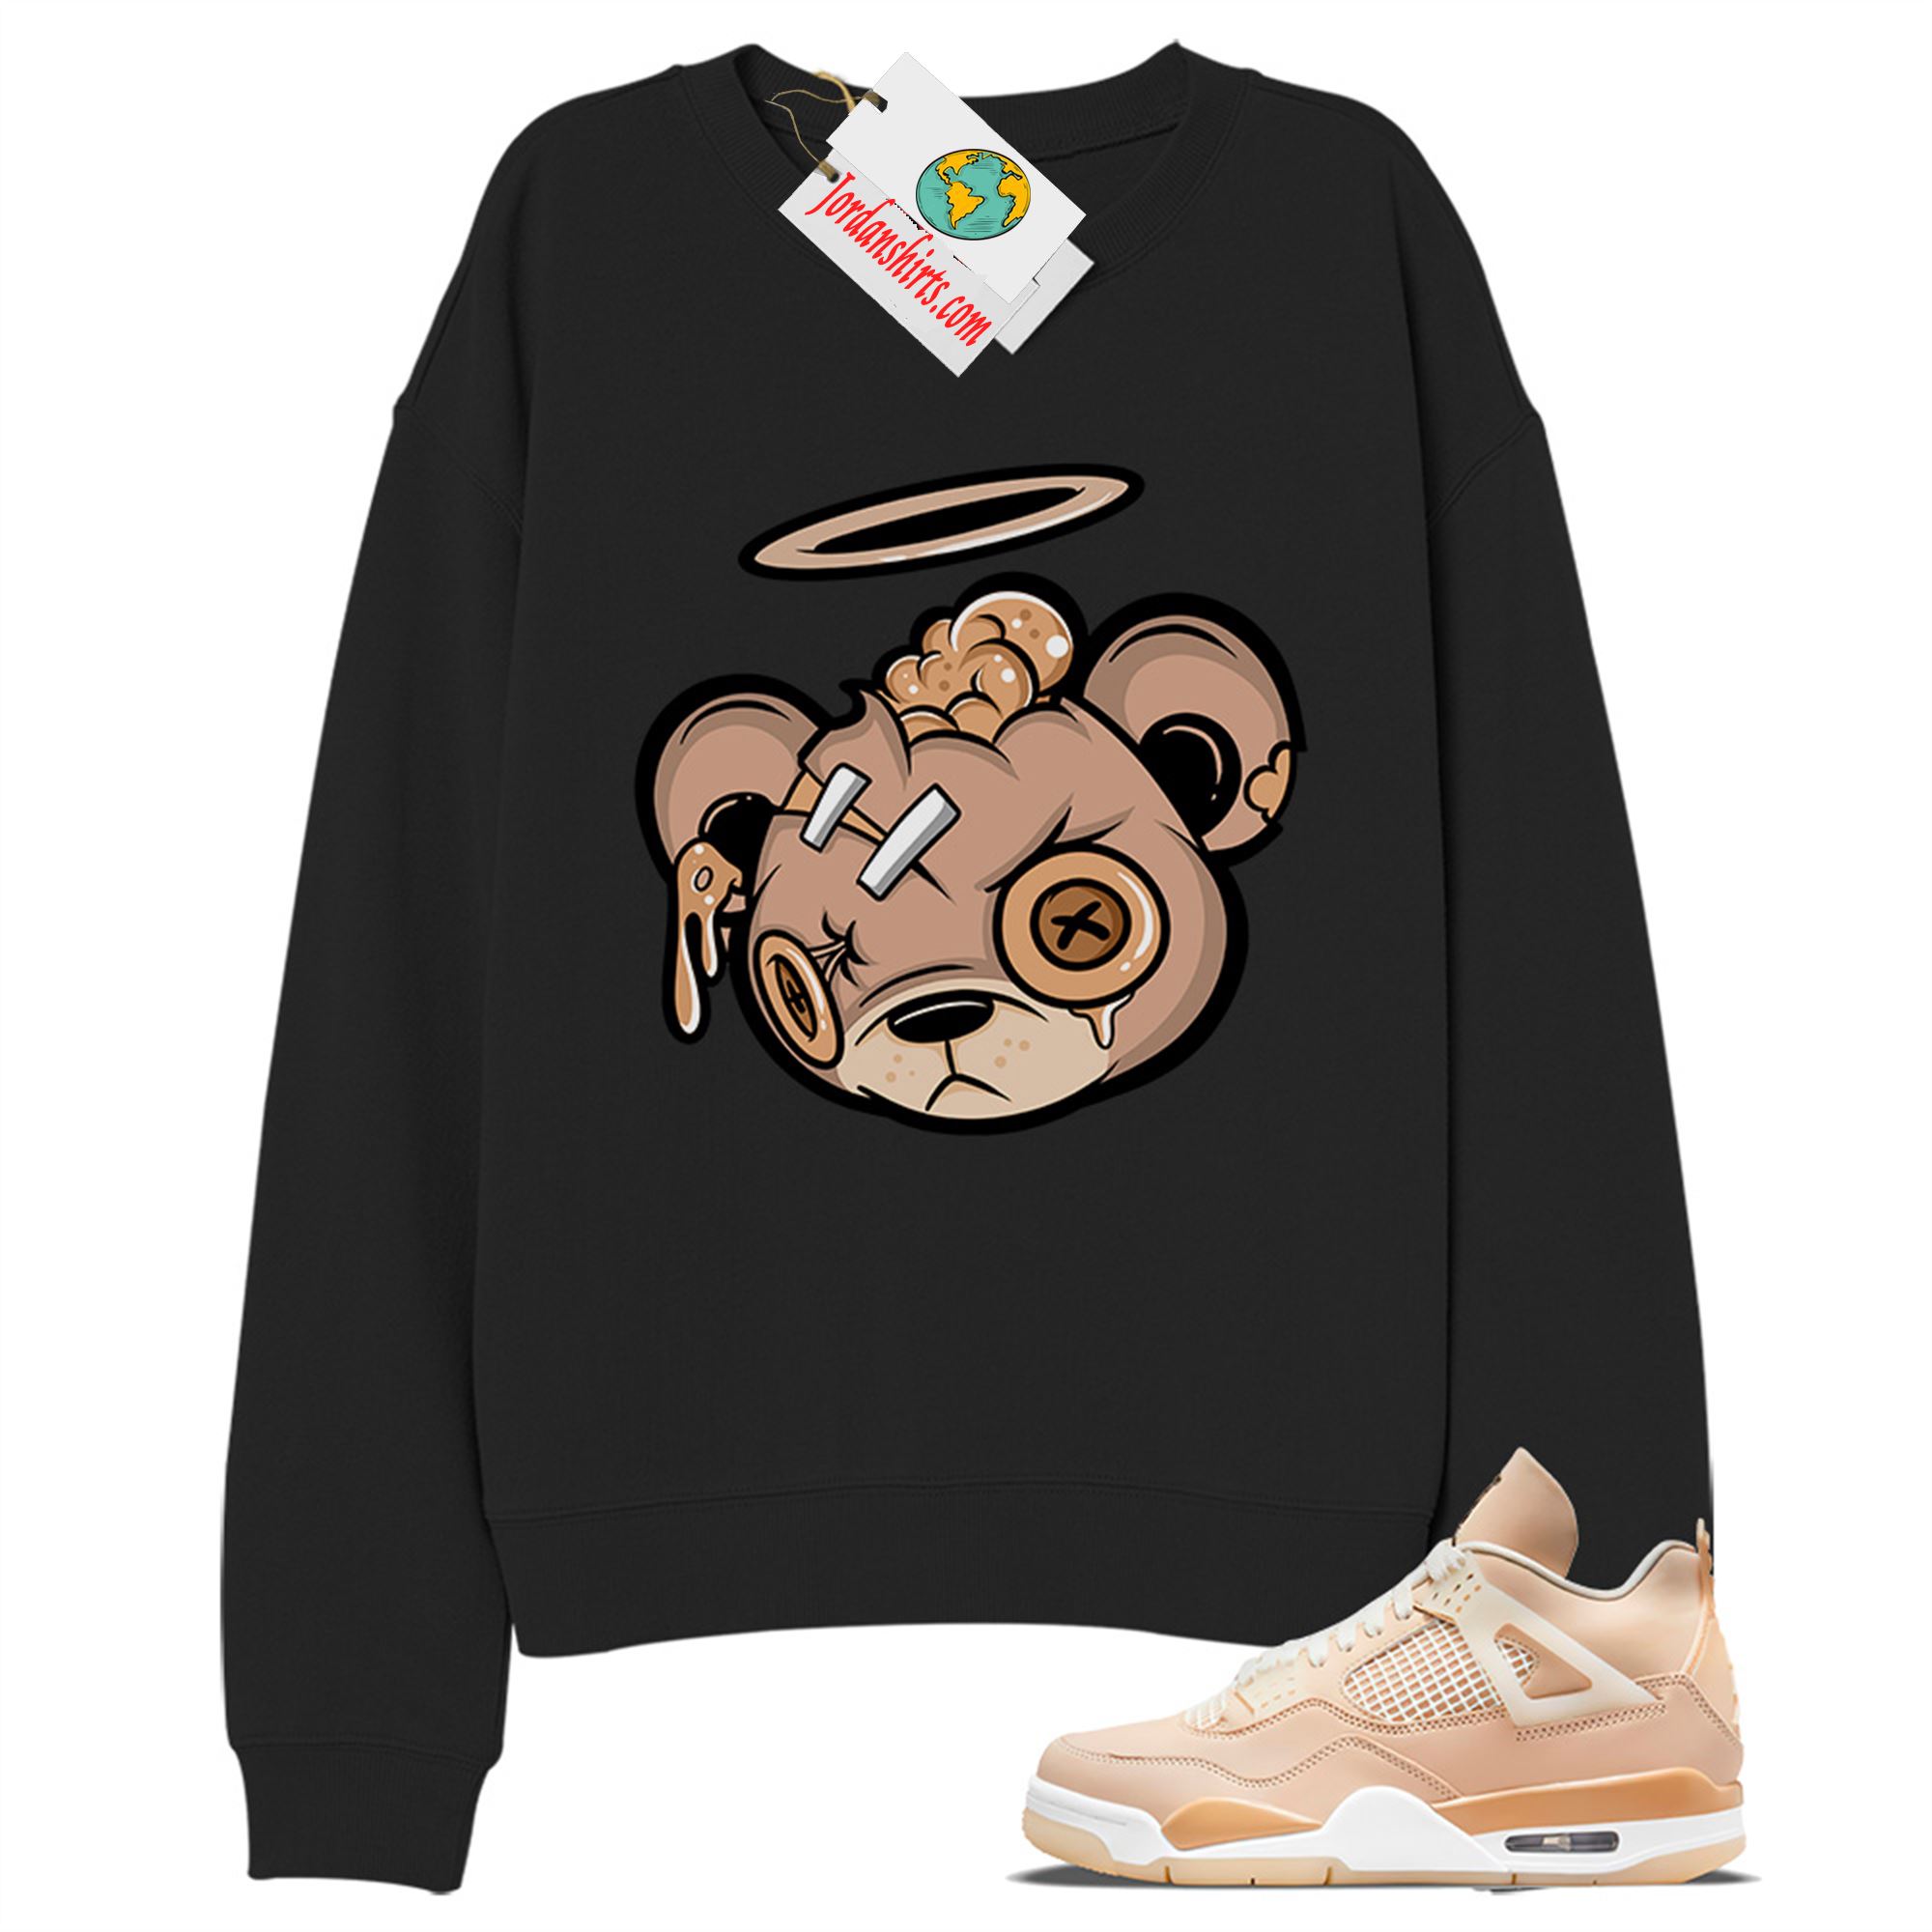 Jordan 4 Sweatshirt, Teddy Bear With Angel Ring Black Sweatshirt Air Jordan 4 Shimmer 4s Full Size Up To 5xl